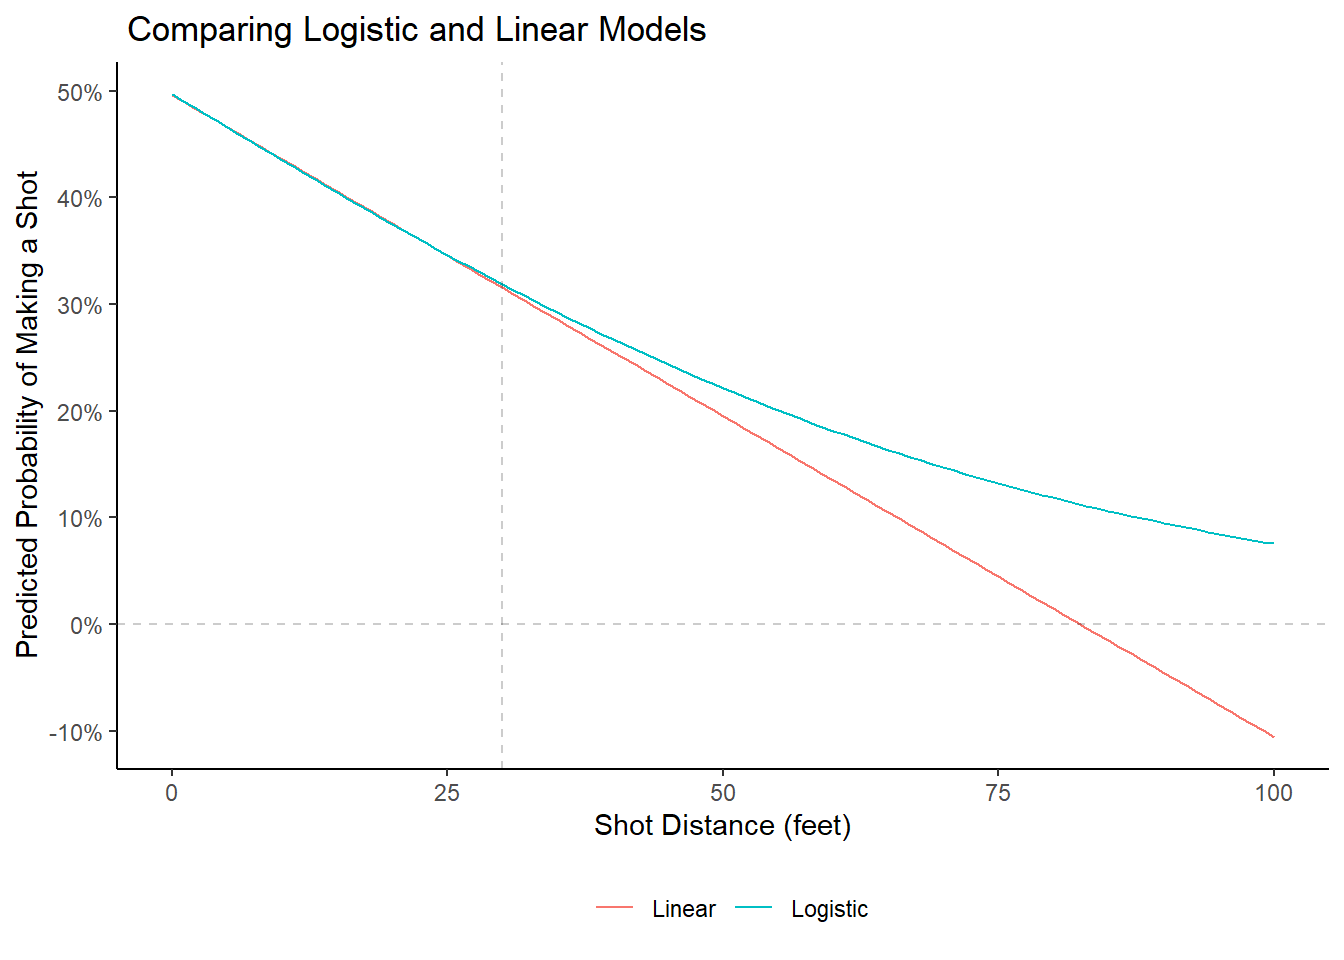 The linear model predicts negative probabilities